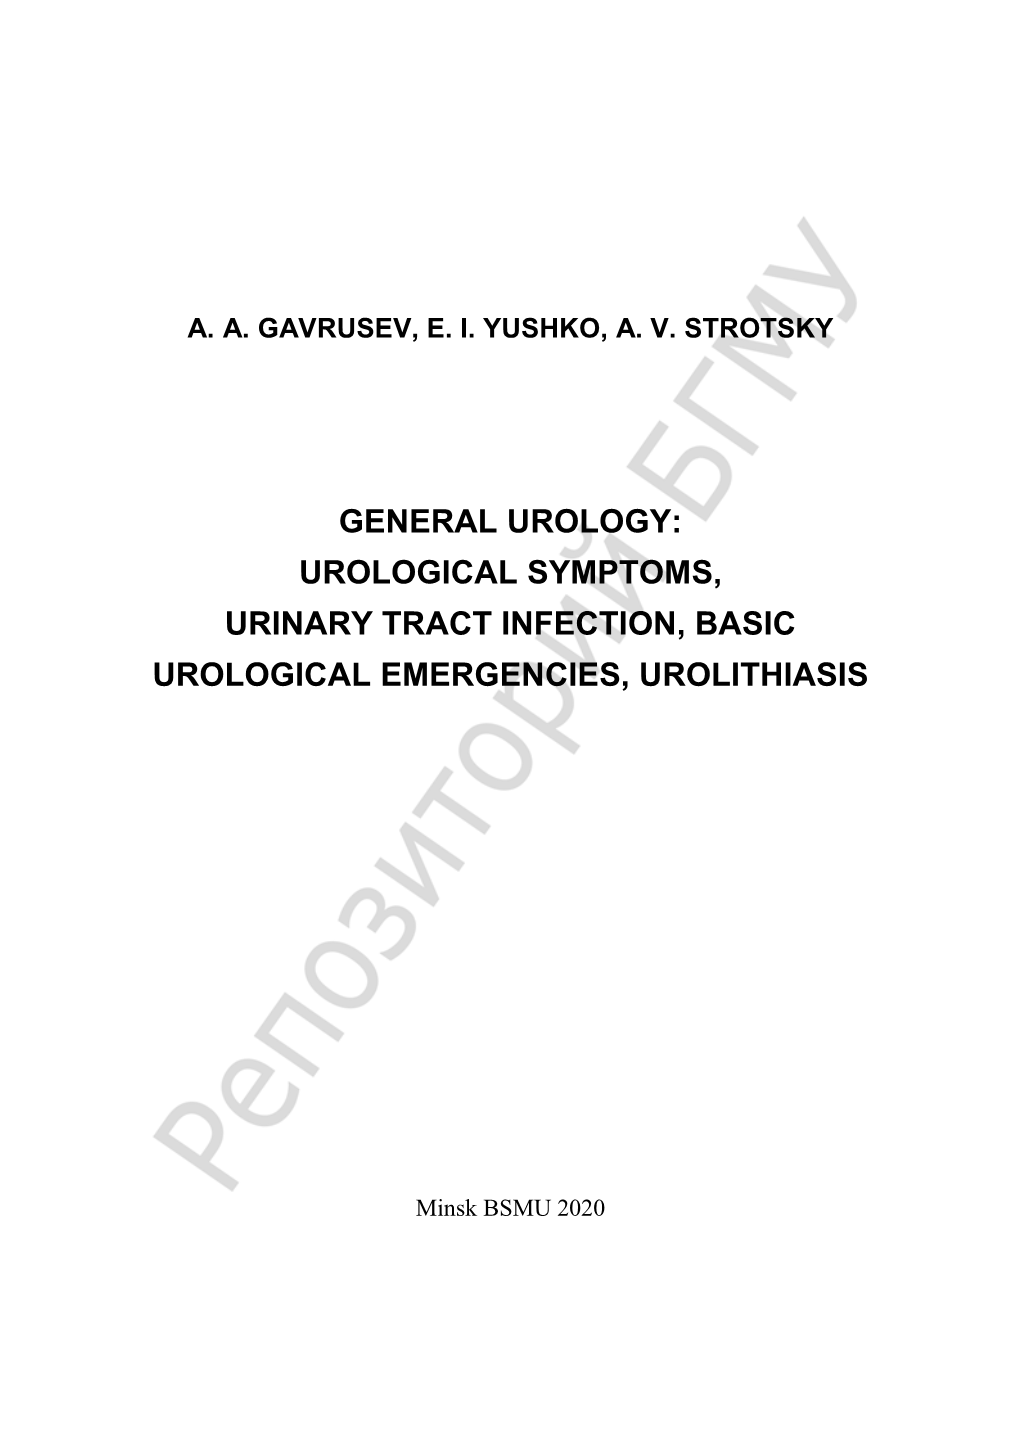 Urological Symptoms, Urinary Tract Infection, Basic Urological Emergencies, Urolithiasis